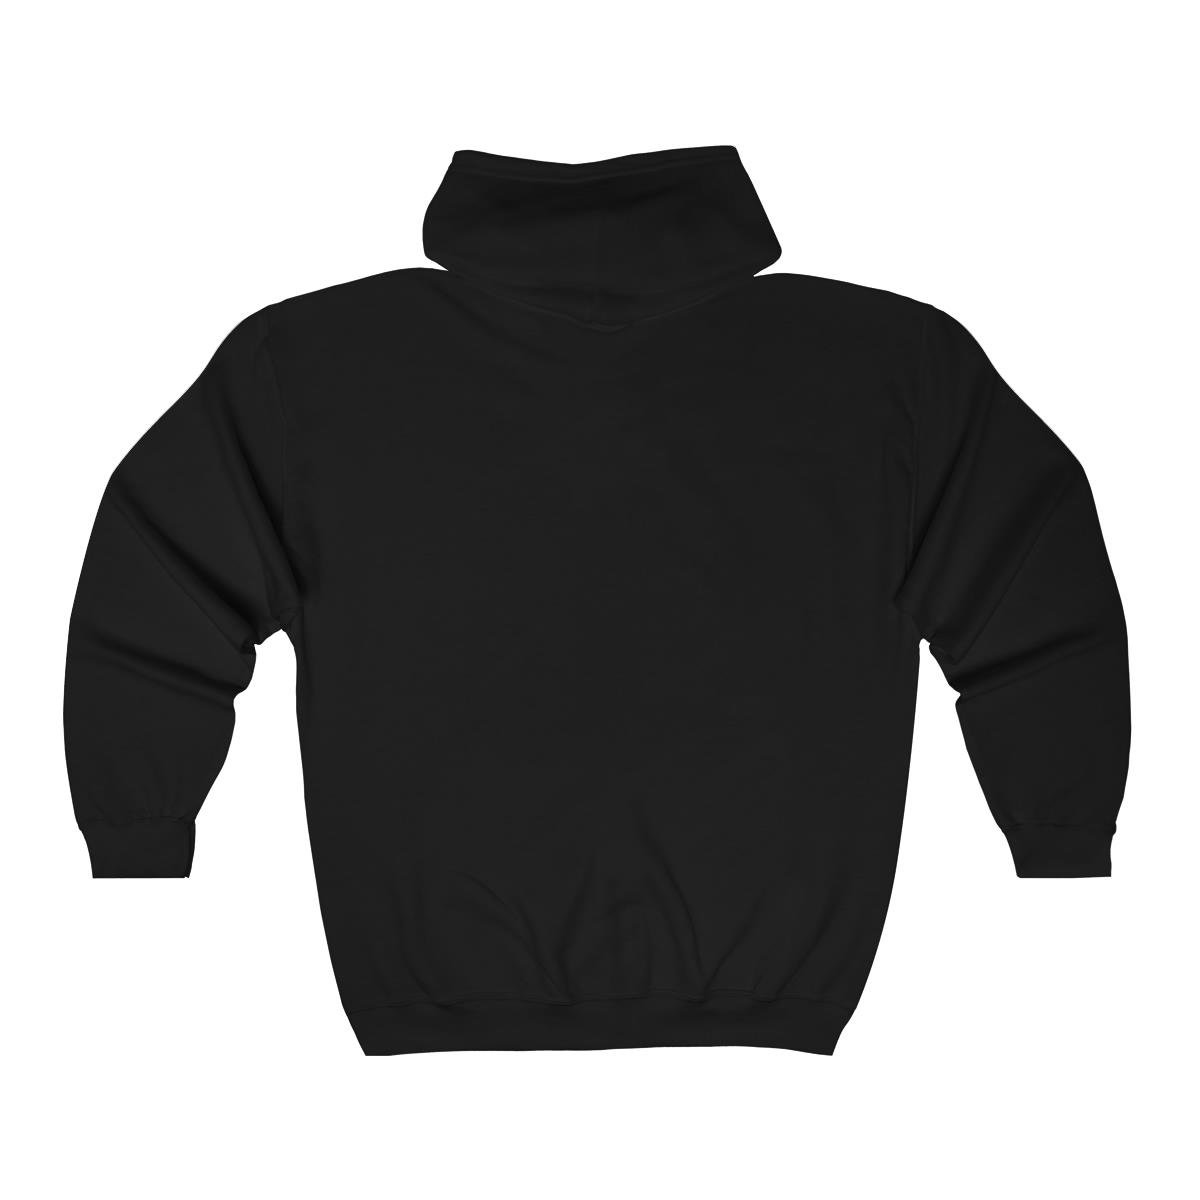 The Hoax – What Will Change (TPR) Full Zip Hooded Sweatshirt